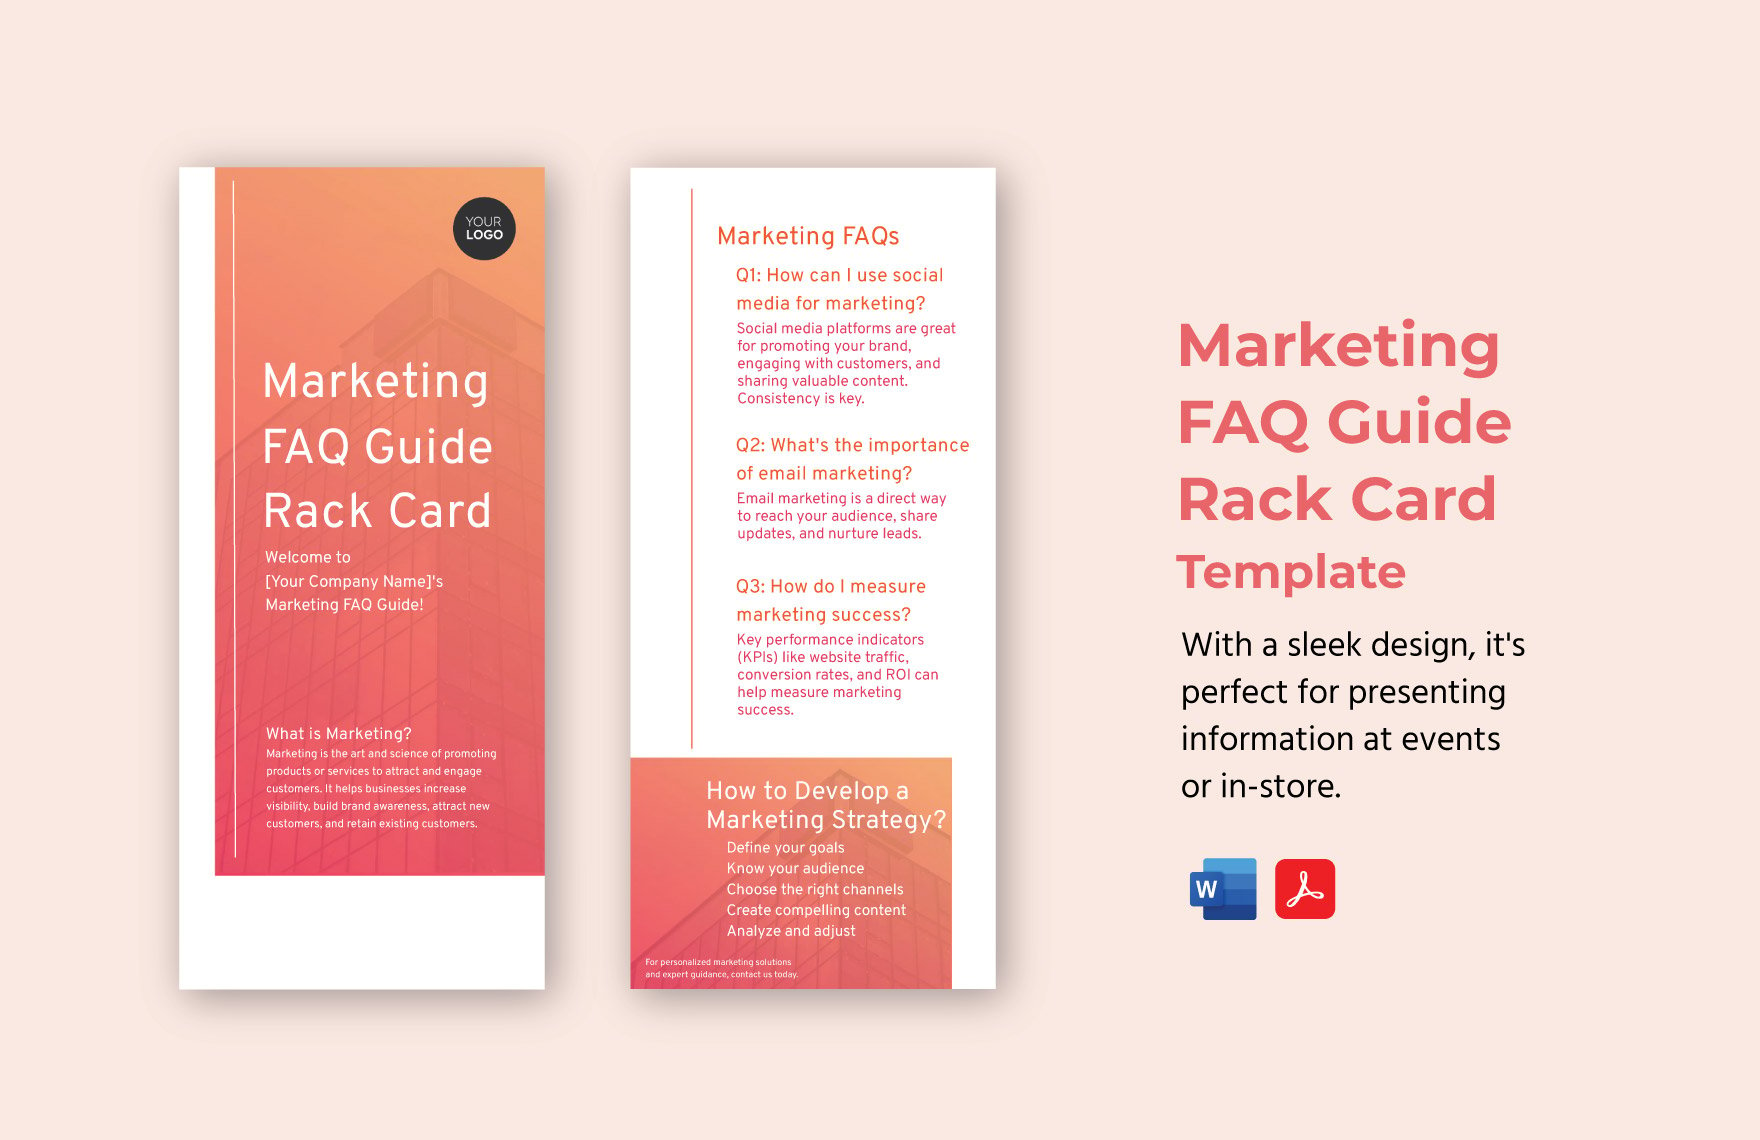 Marketing FAQ Guide Rack Card Template